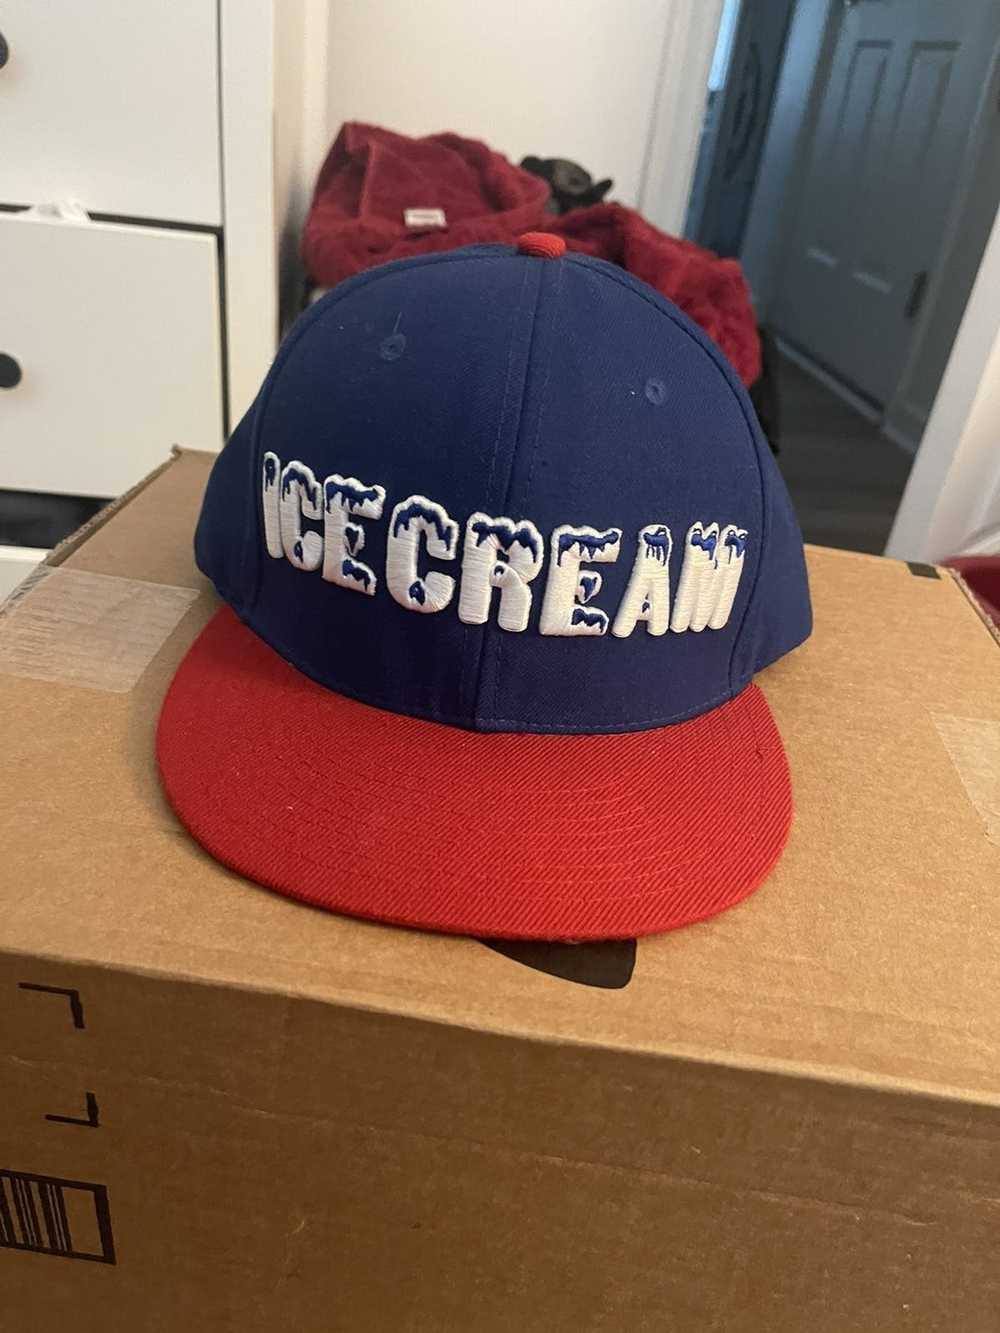 Icecream Ice cream SnapBack - image 2